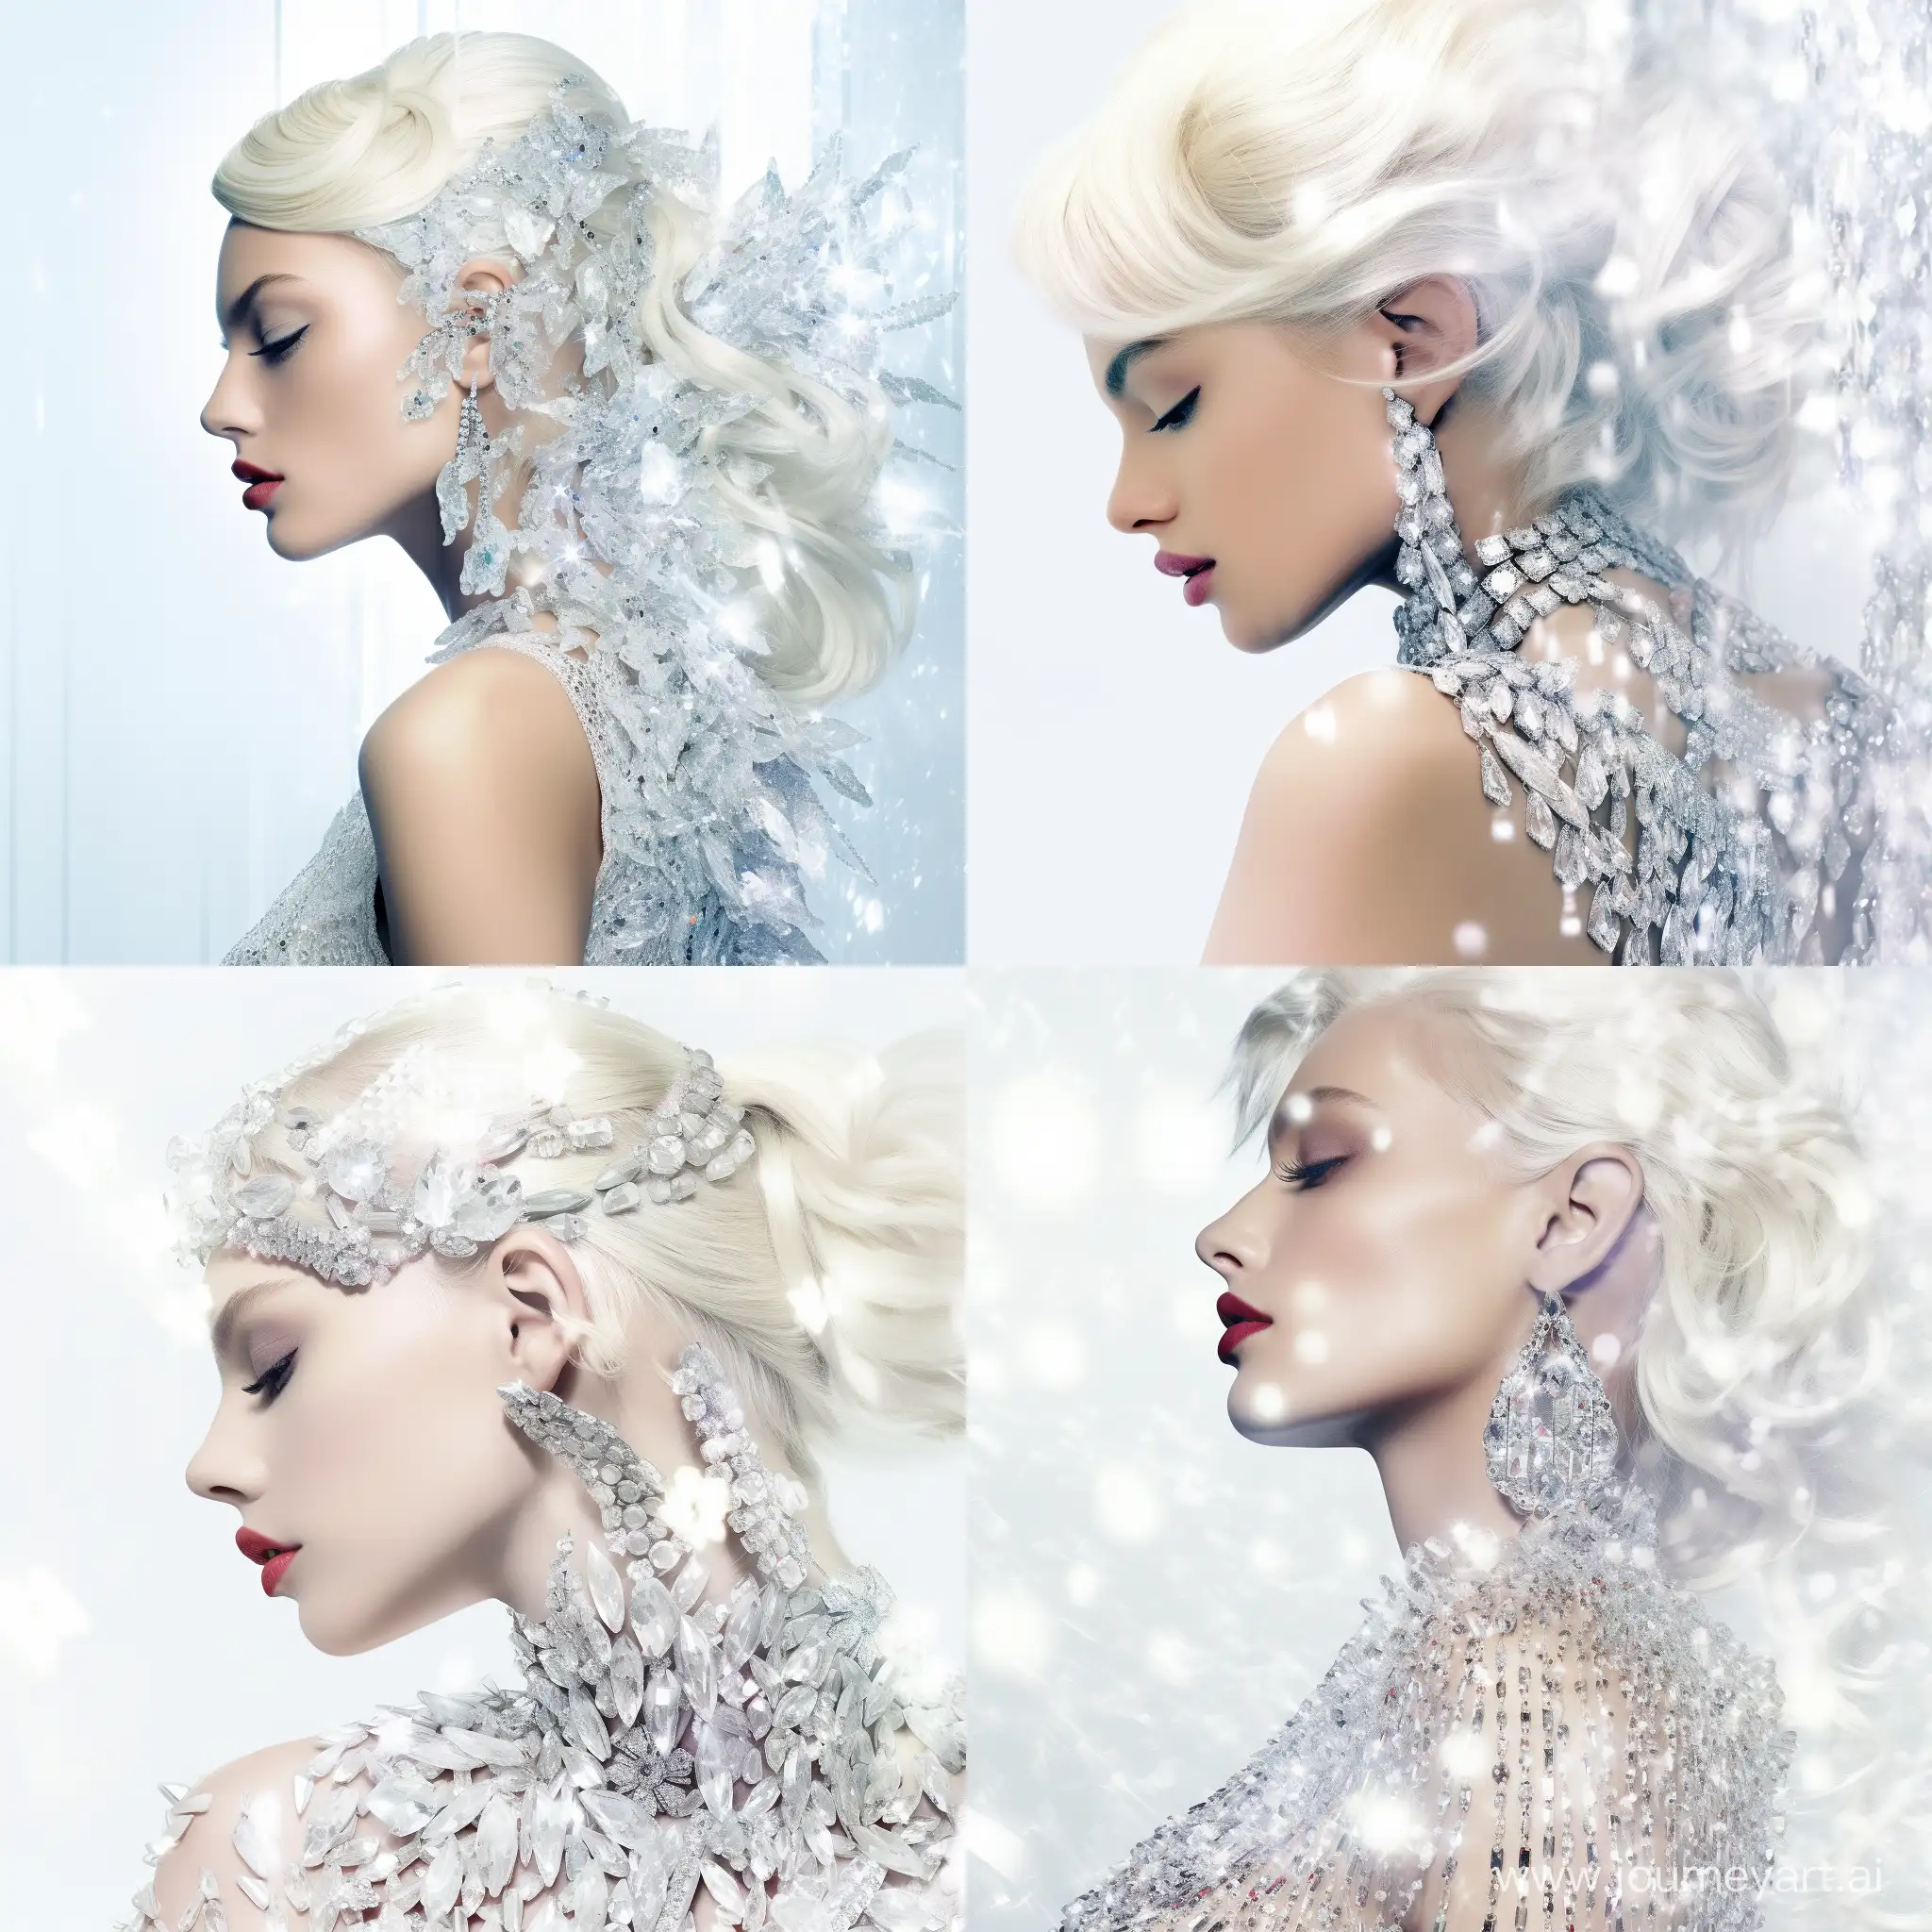 Swarovski-Crystals-Art-Vogue-Icycles-and-SnowWhite-Elegance